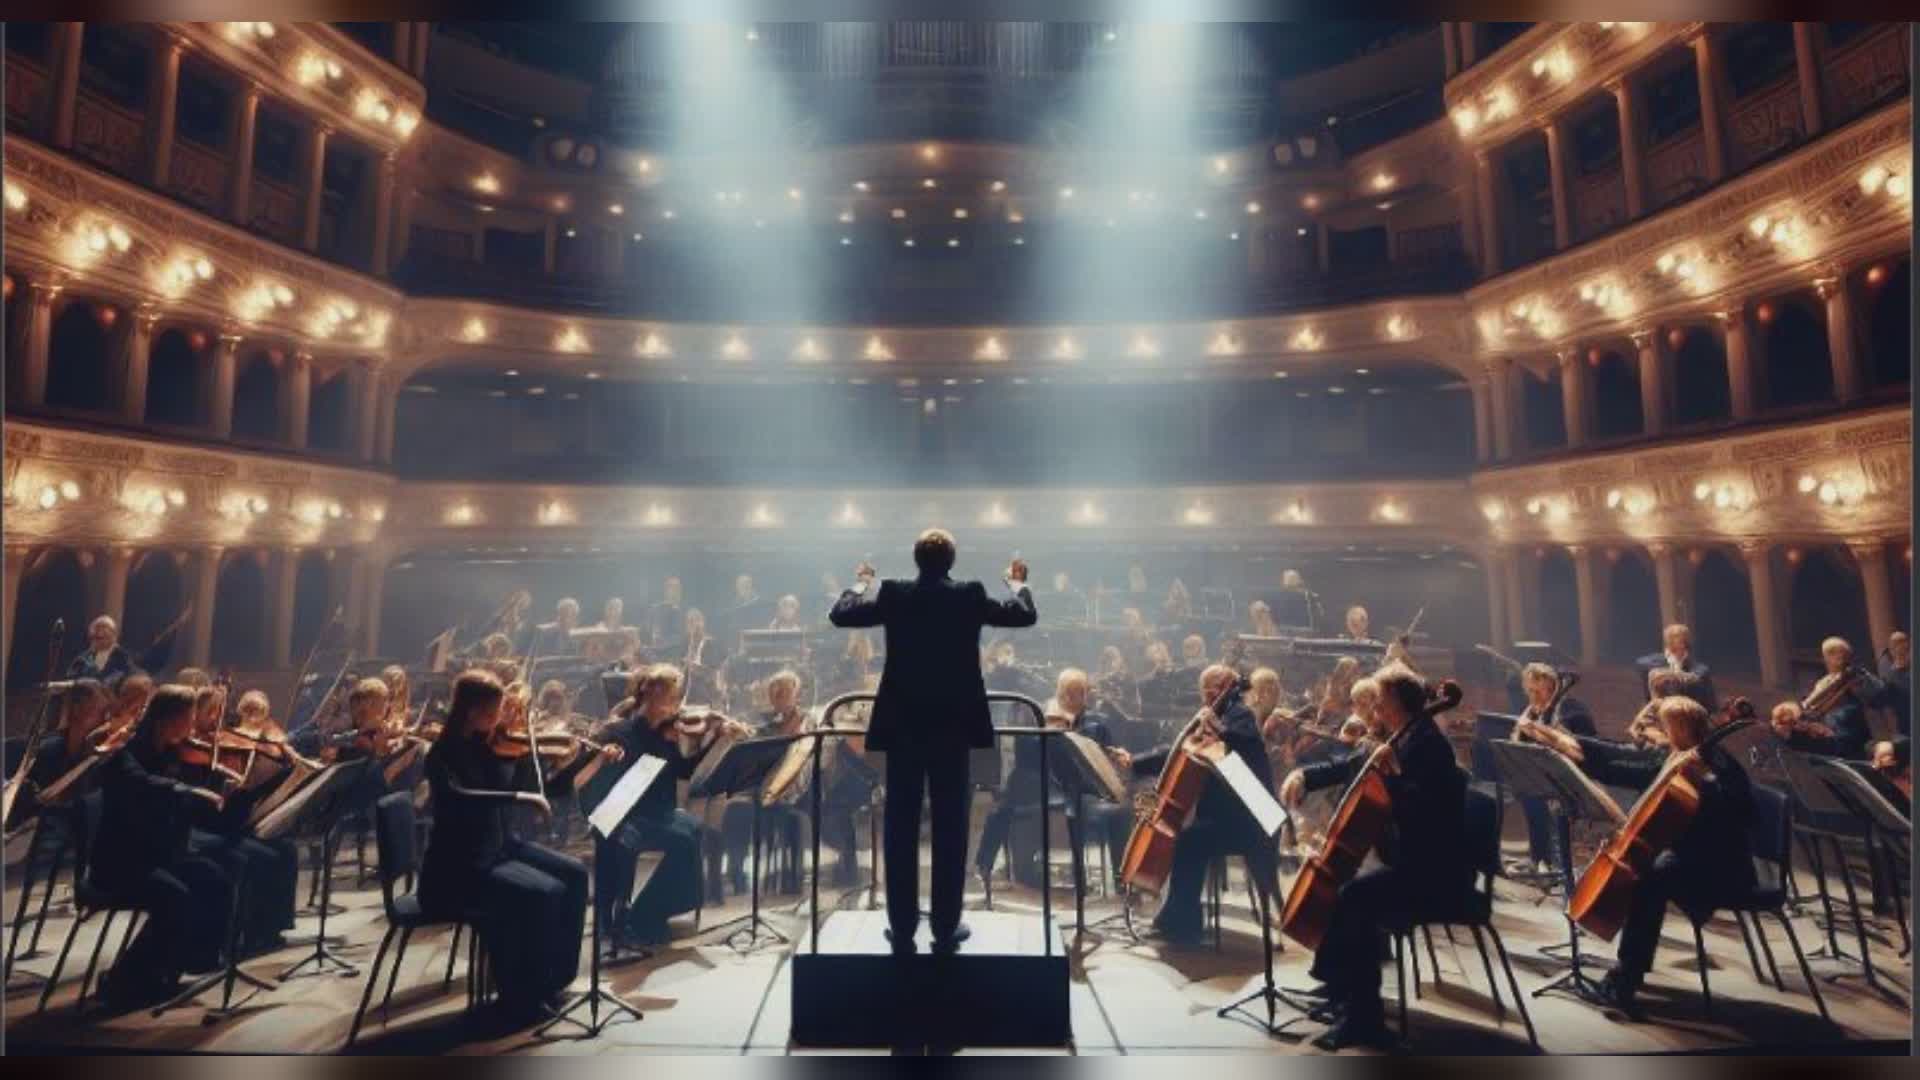 Orchestre sinfoniche: 250 milioni per la crescita del settore, proposta di legge di Bagnasco (FI)